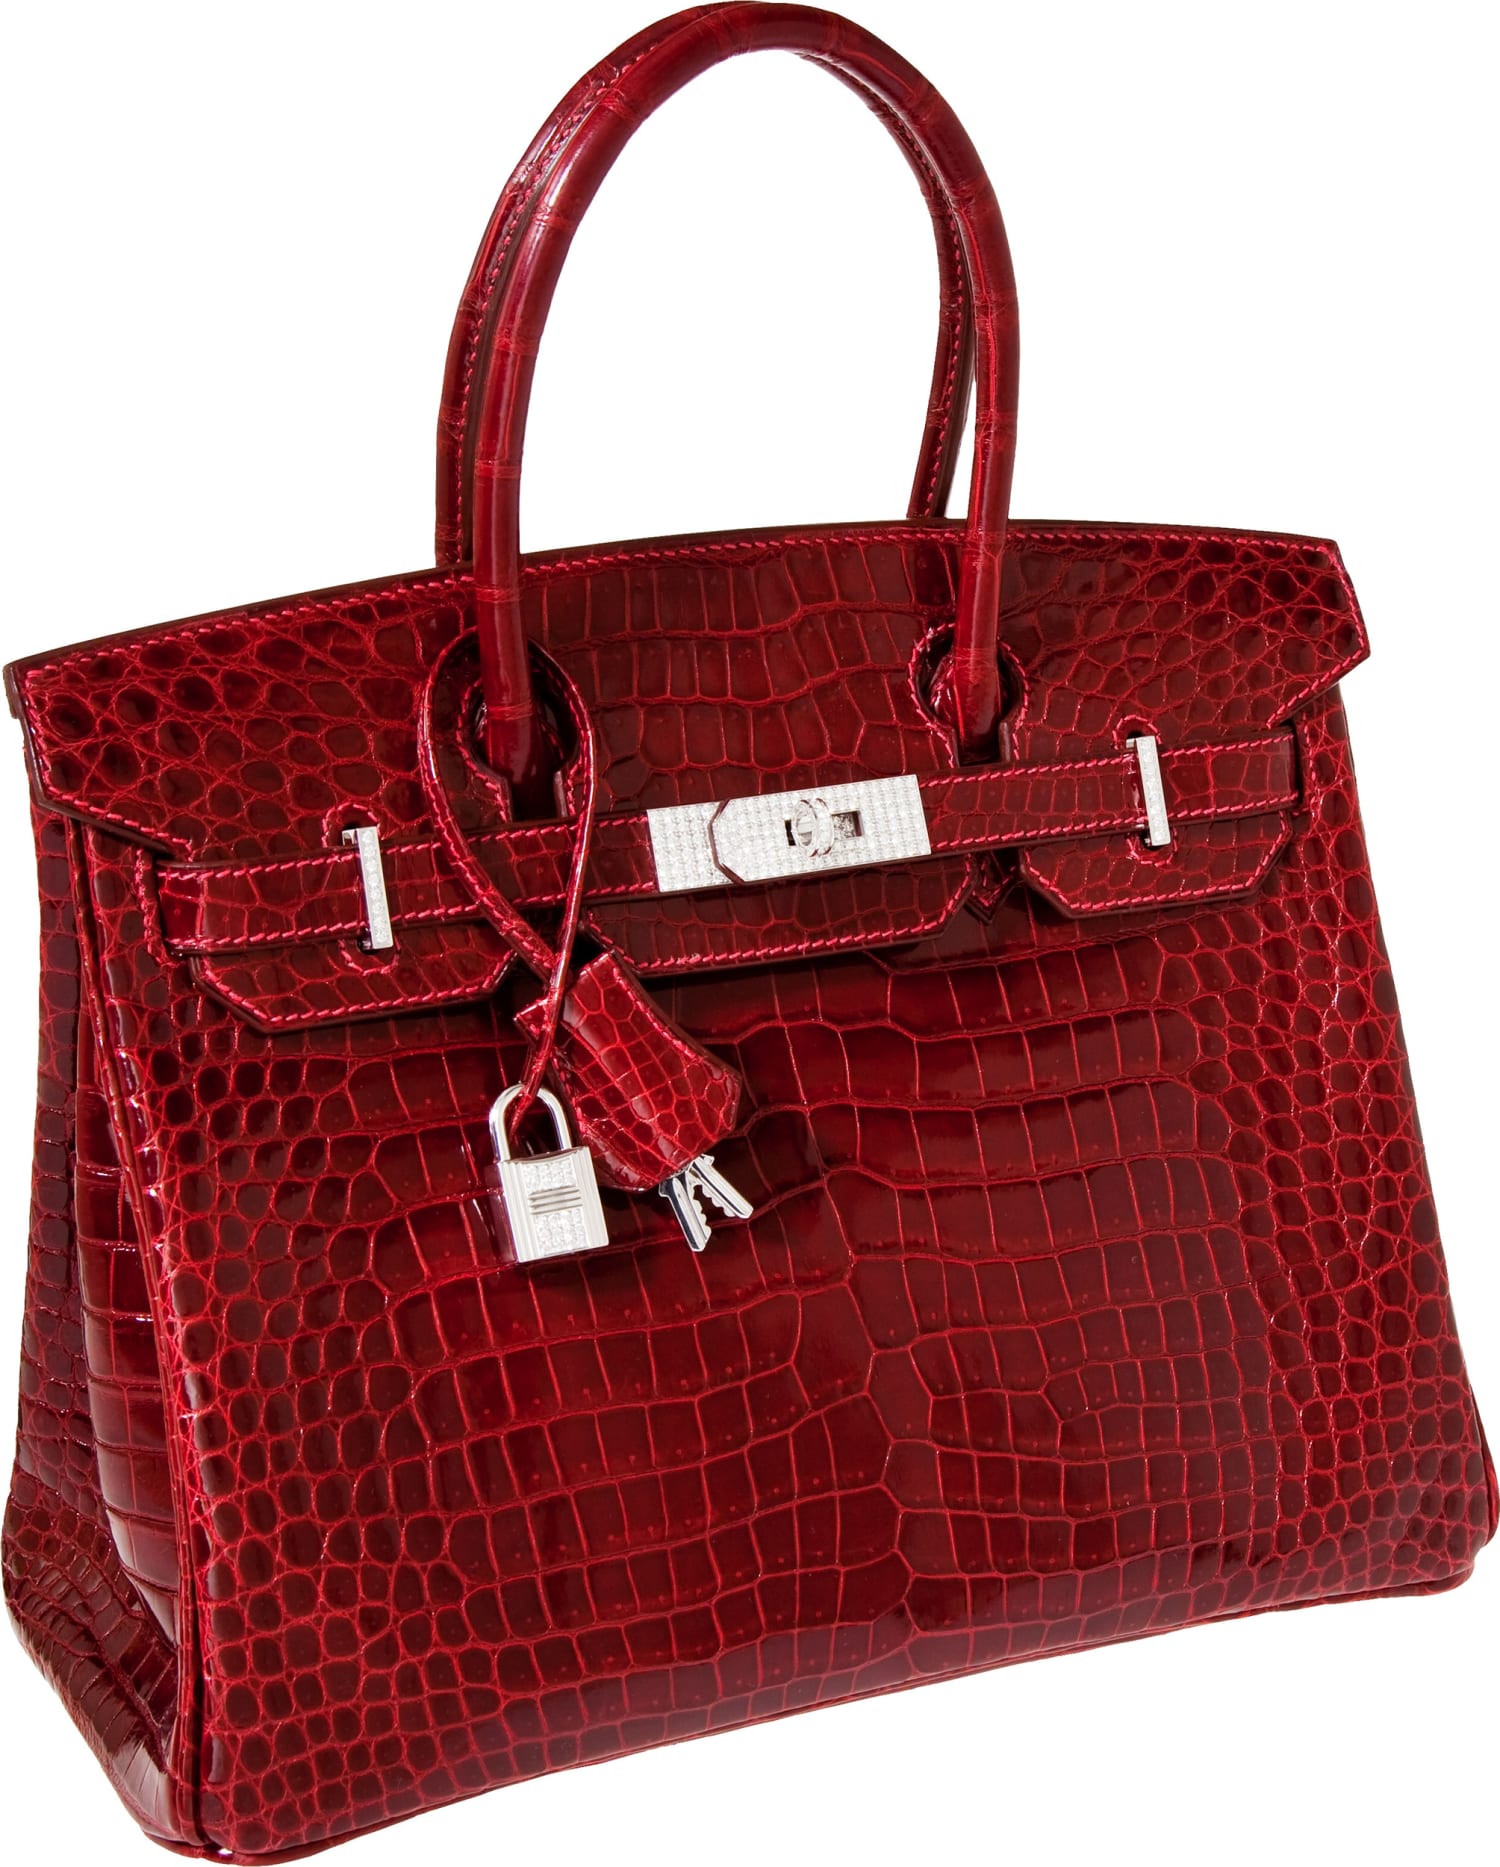 The investment that outstrips gold: a Hermès Birkin handbag